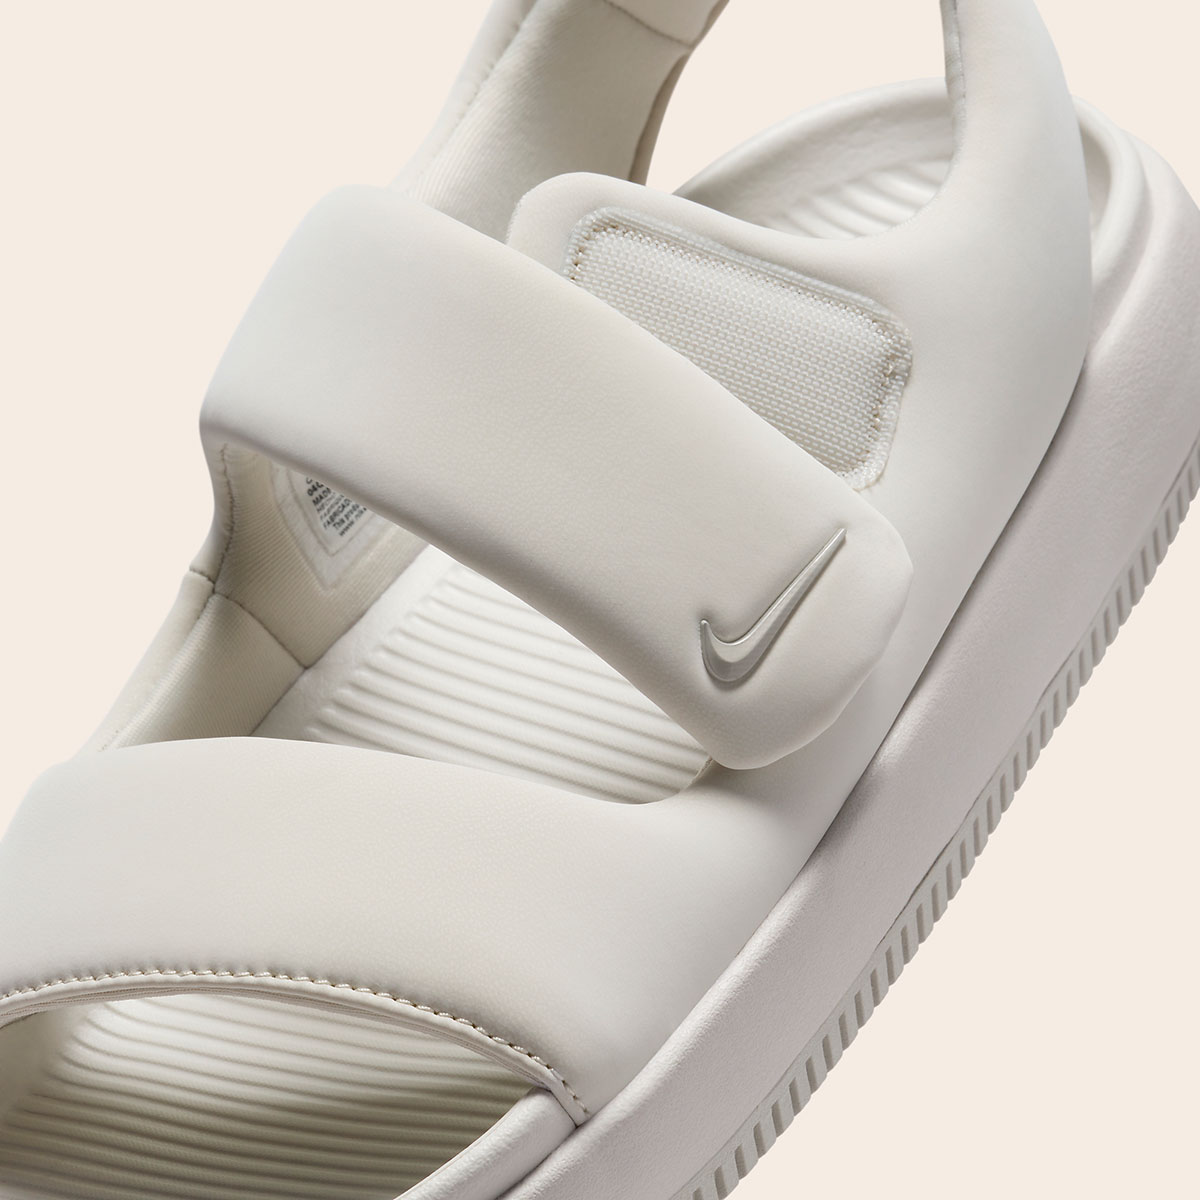 Nike Calm Sandal Release Date 7